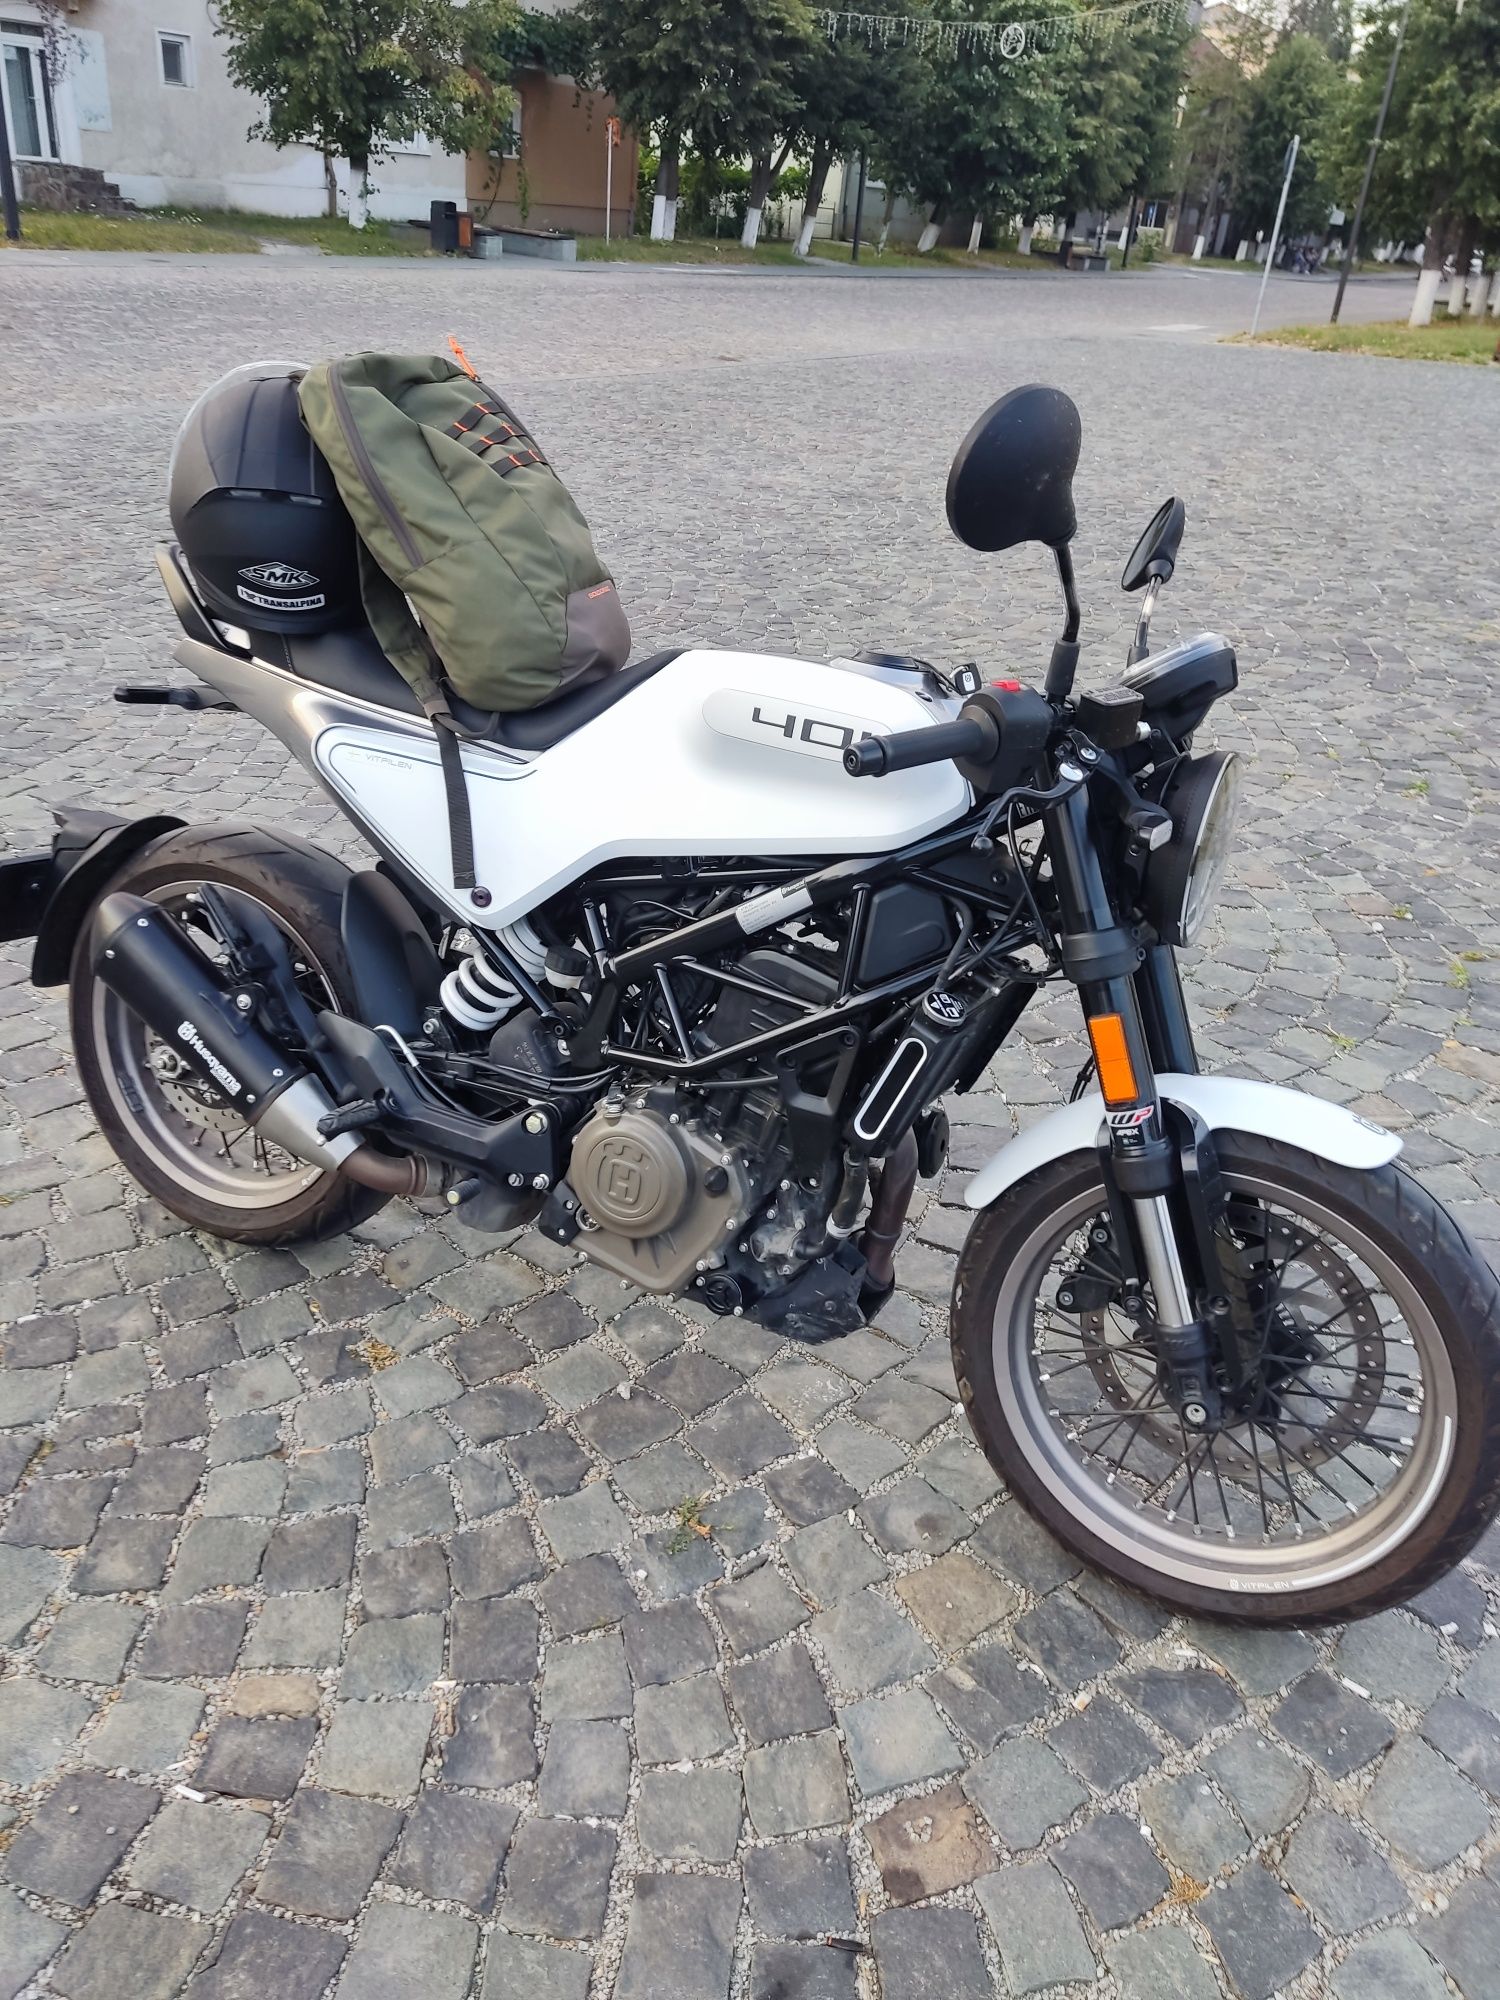 Motocicleta Husqvarna vitpilen 401 inca in garantie